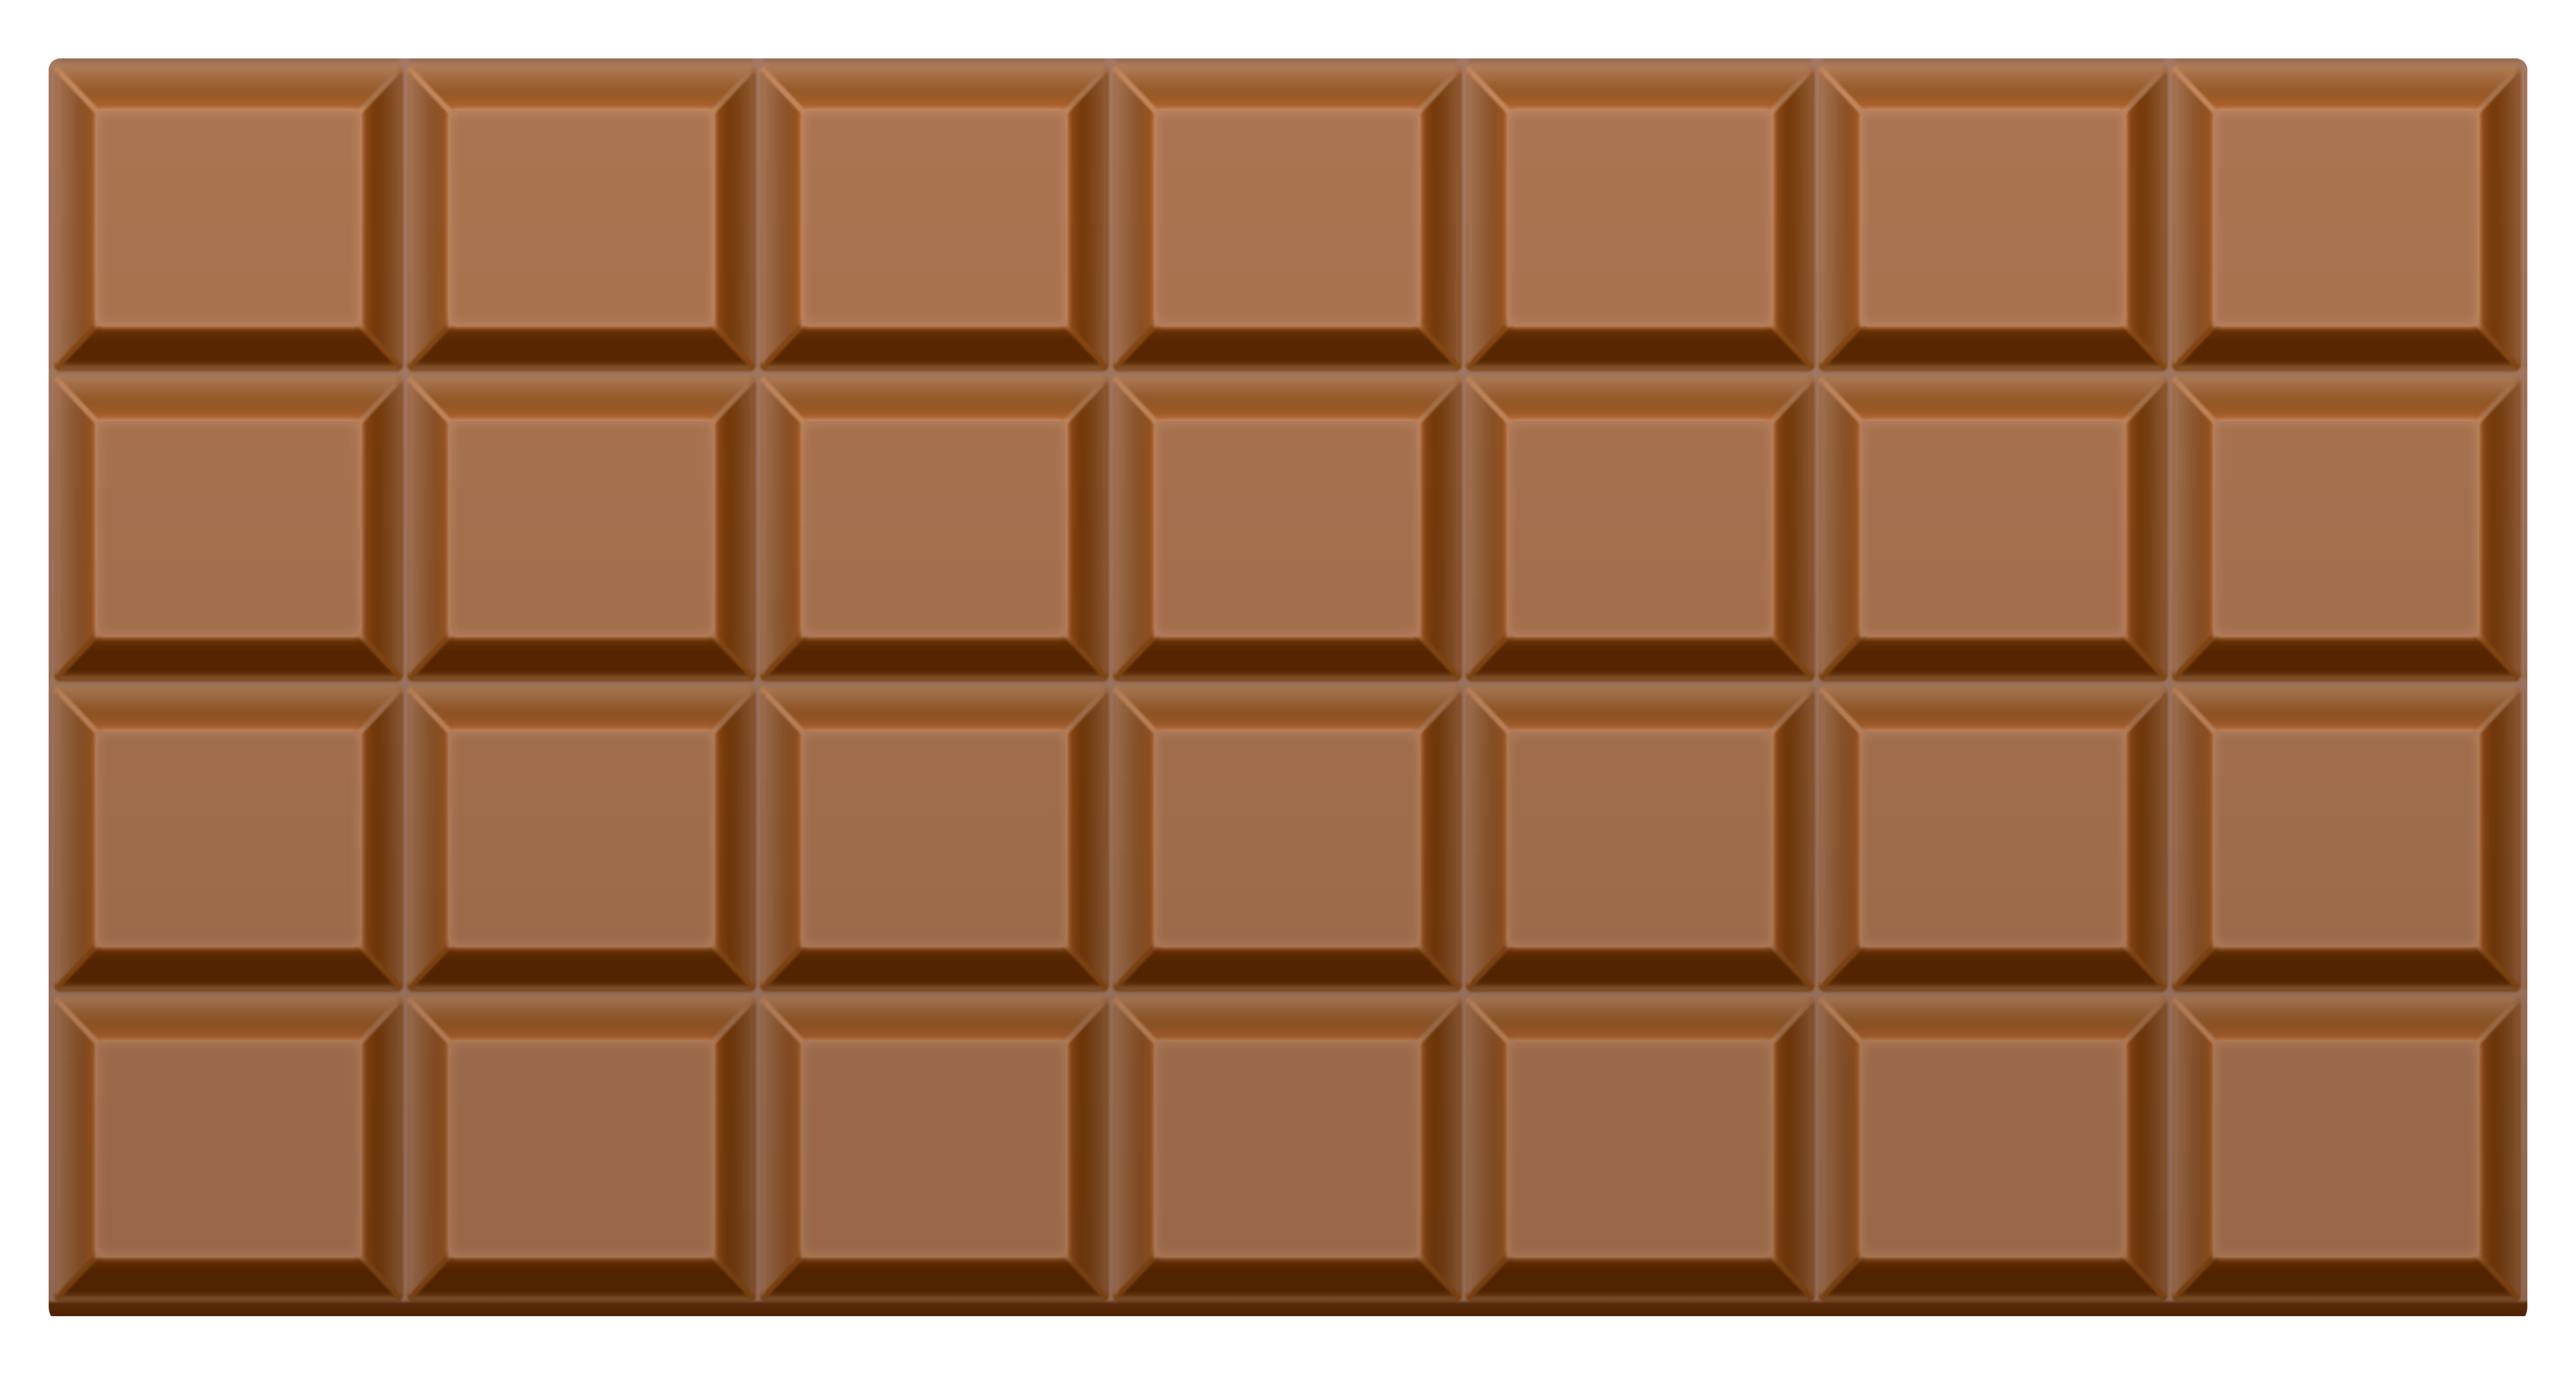 chocolate clipart choco bar